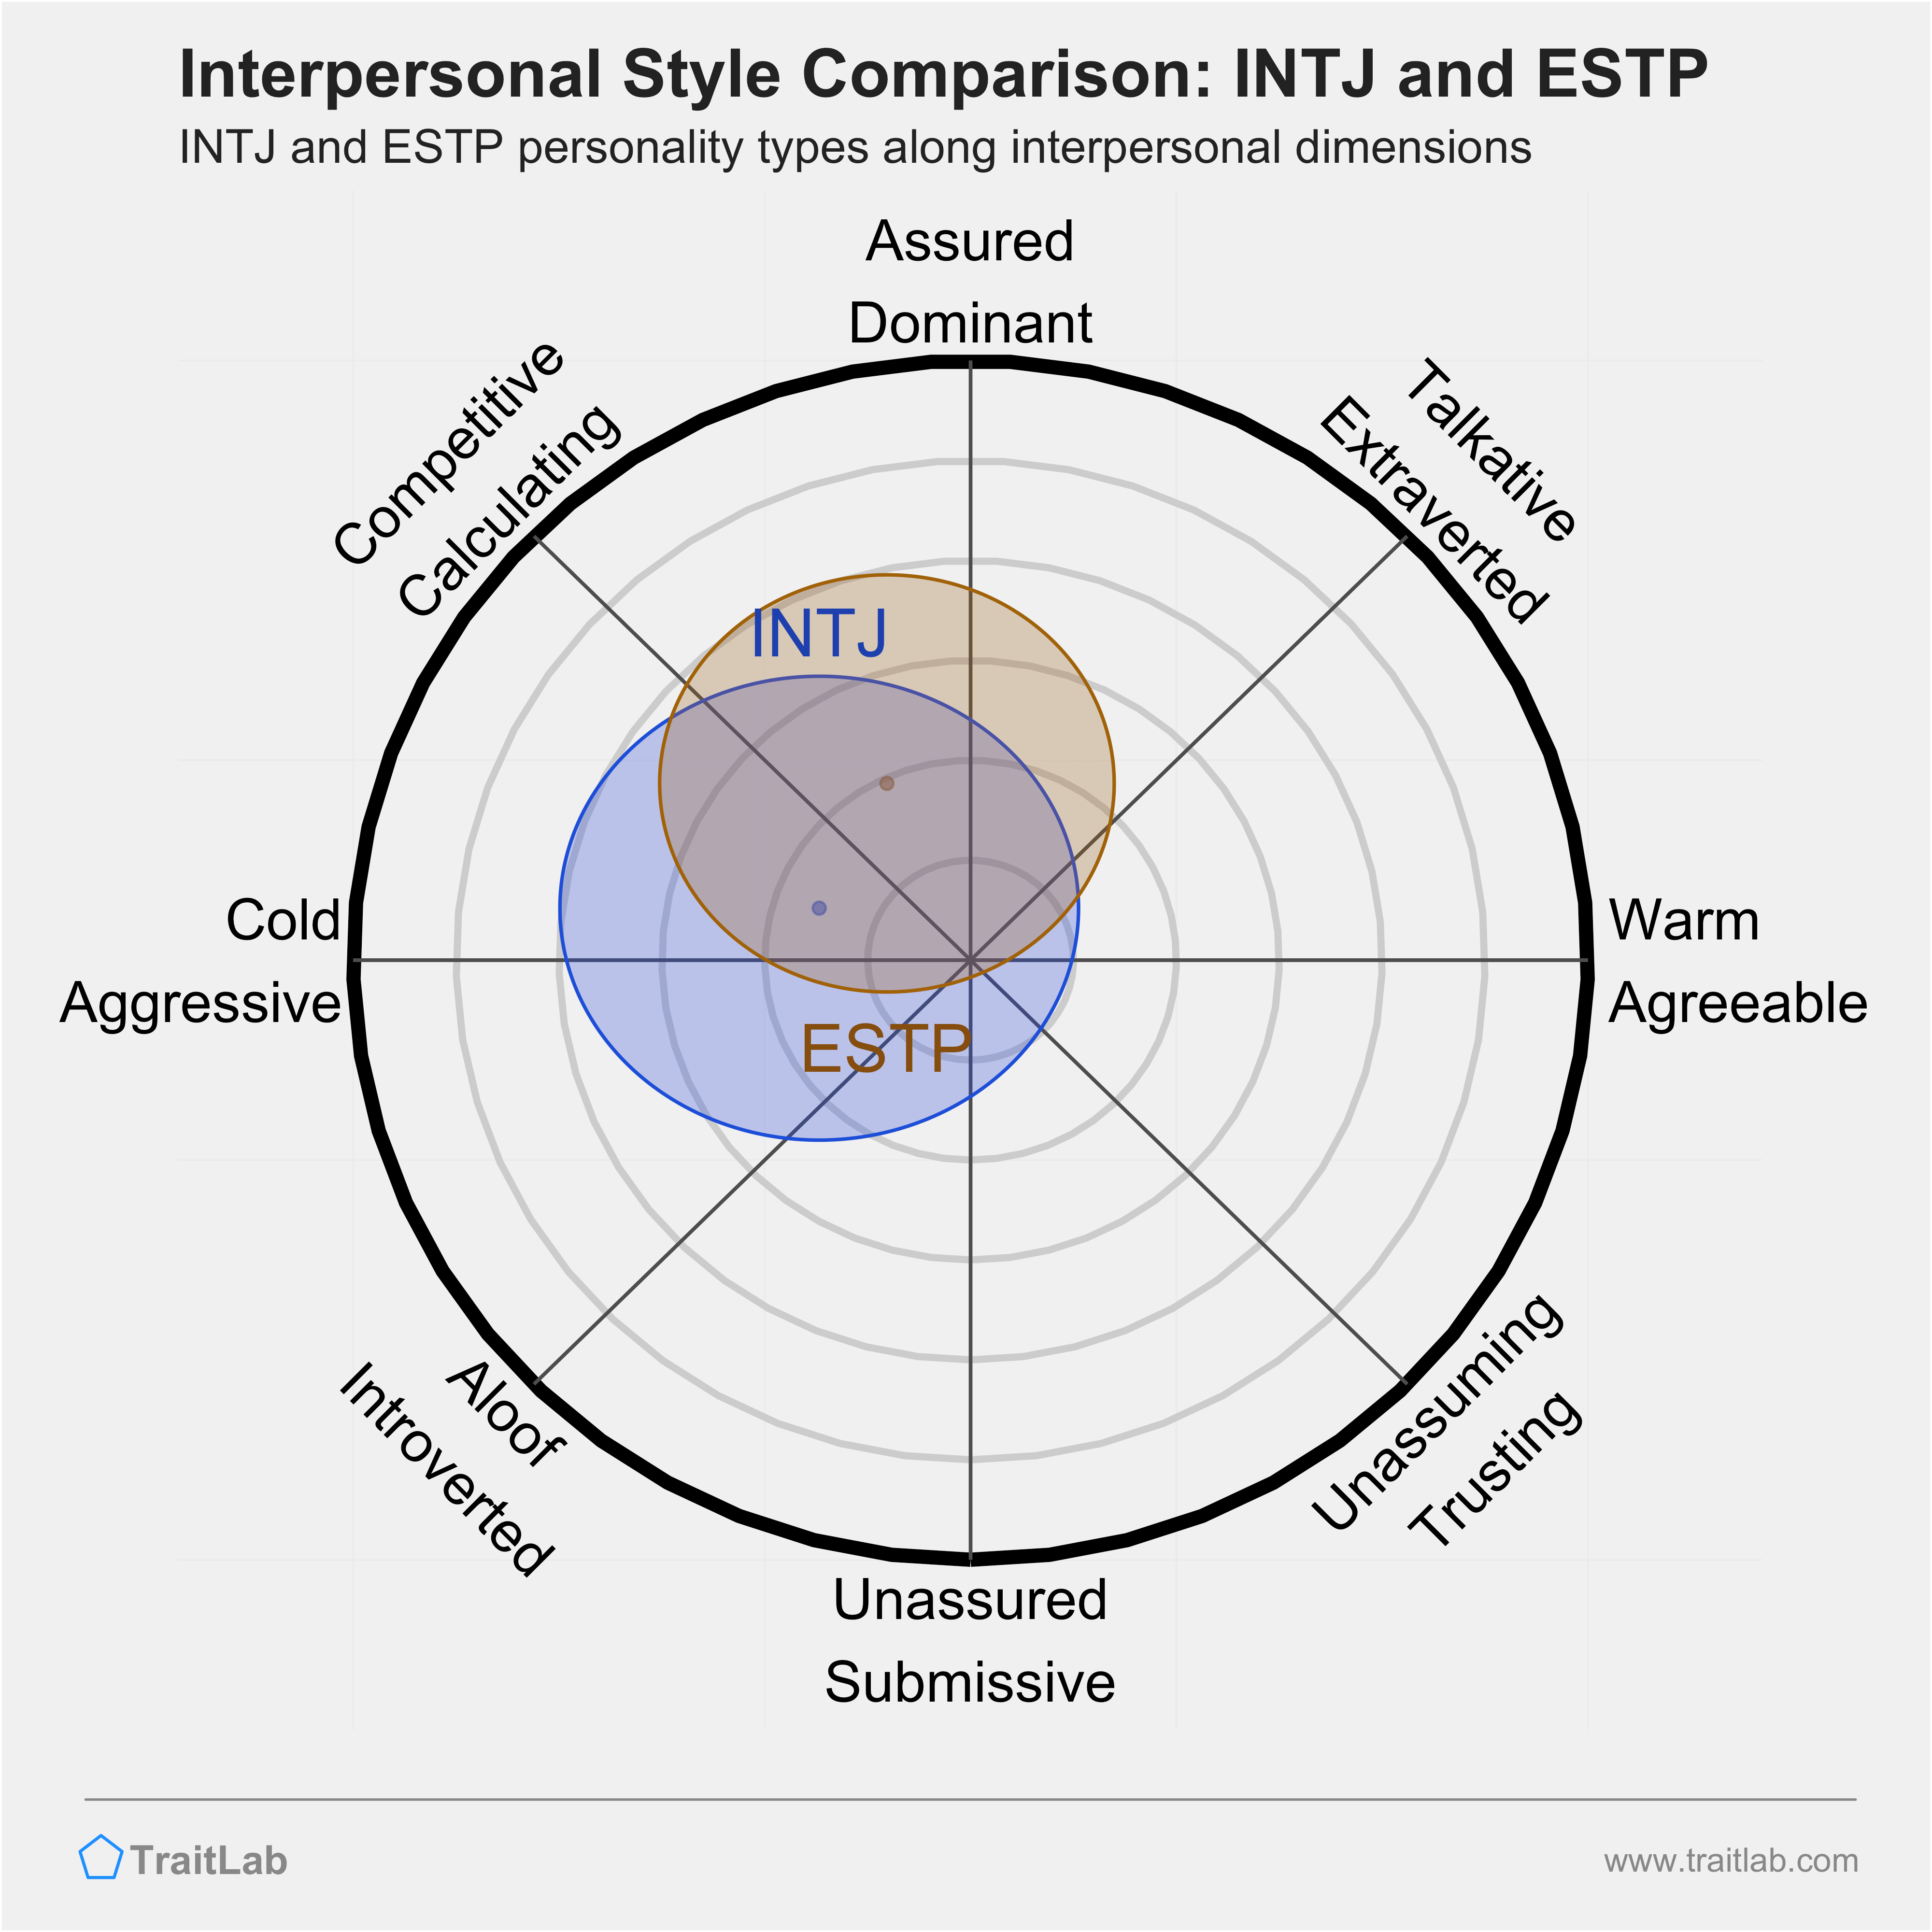 INTJ and ESTP comparison across interpersonal dimensions